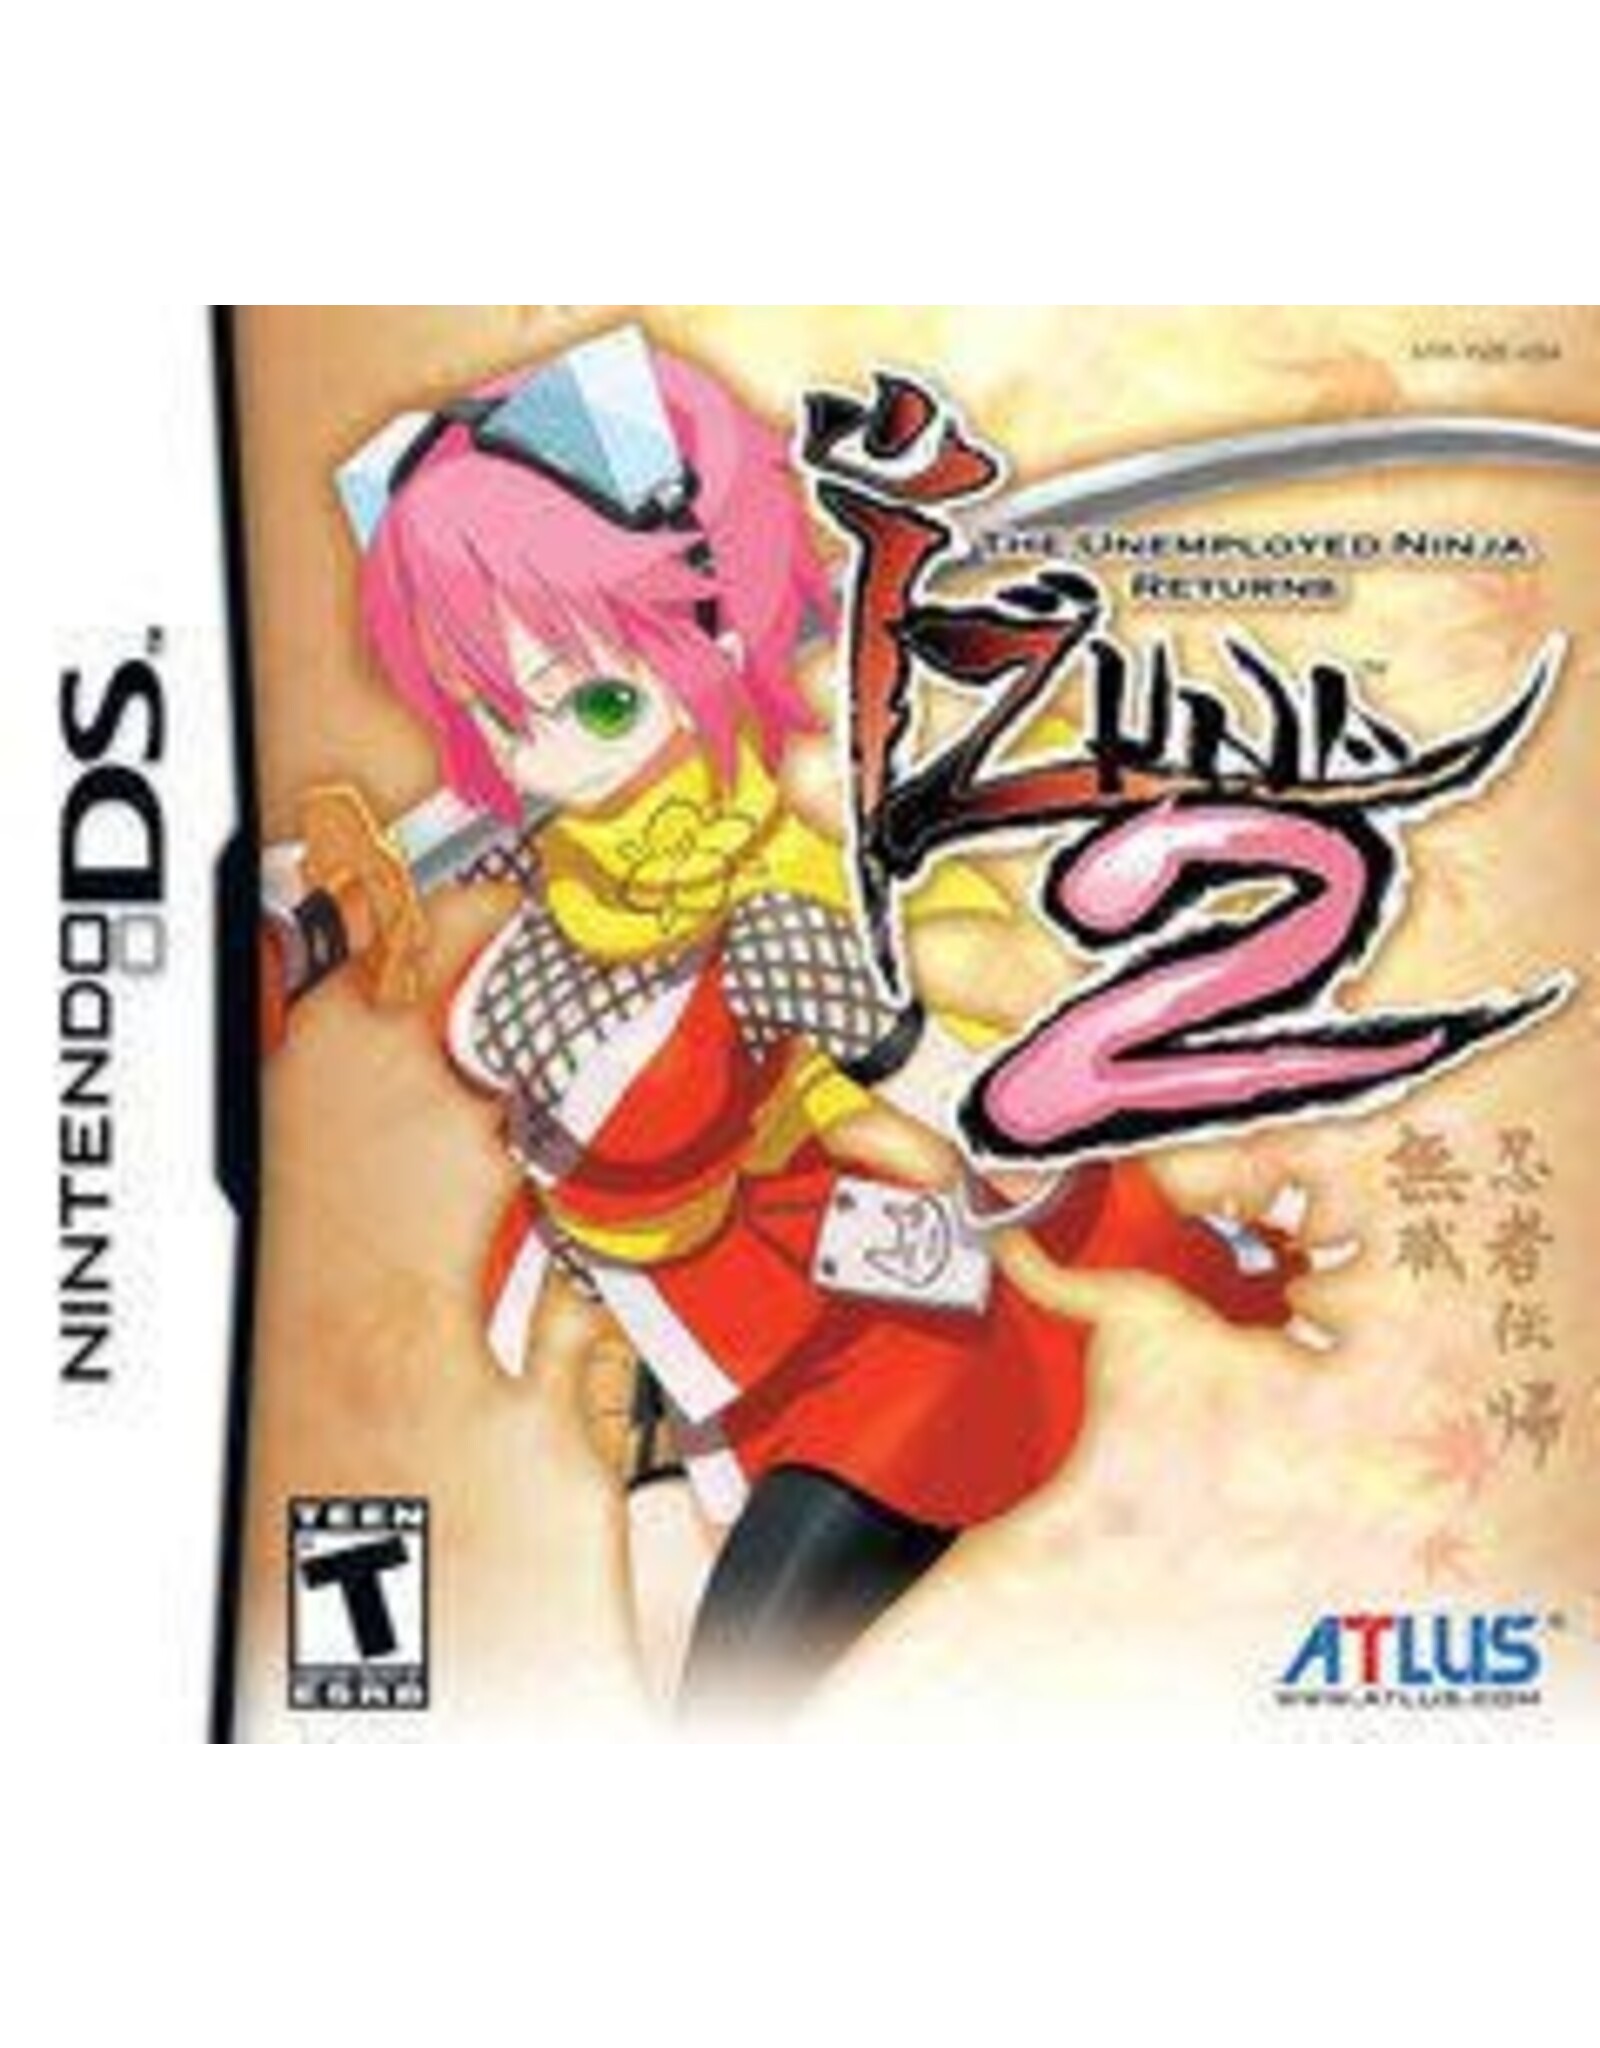 Nintendo DS Izuna 2 The Unemployed Ninja Returns (Used)